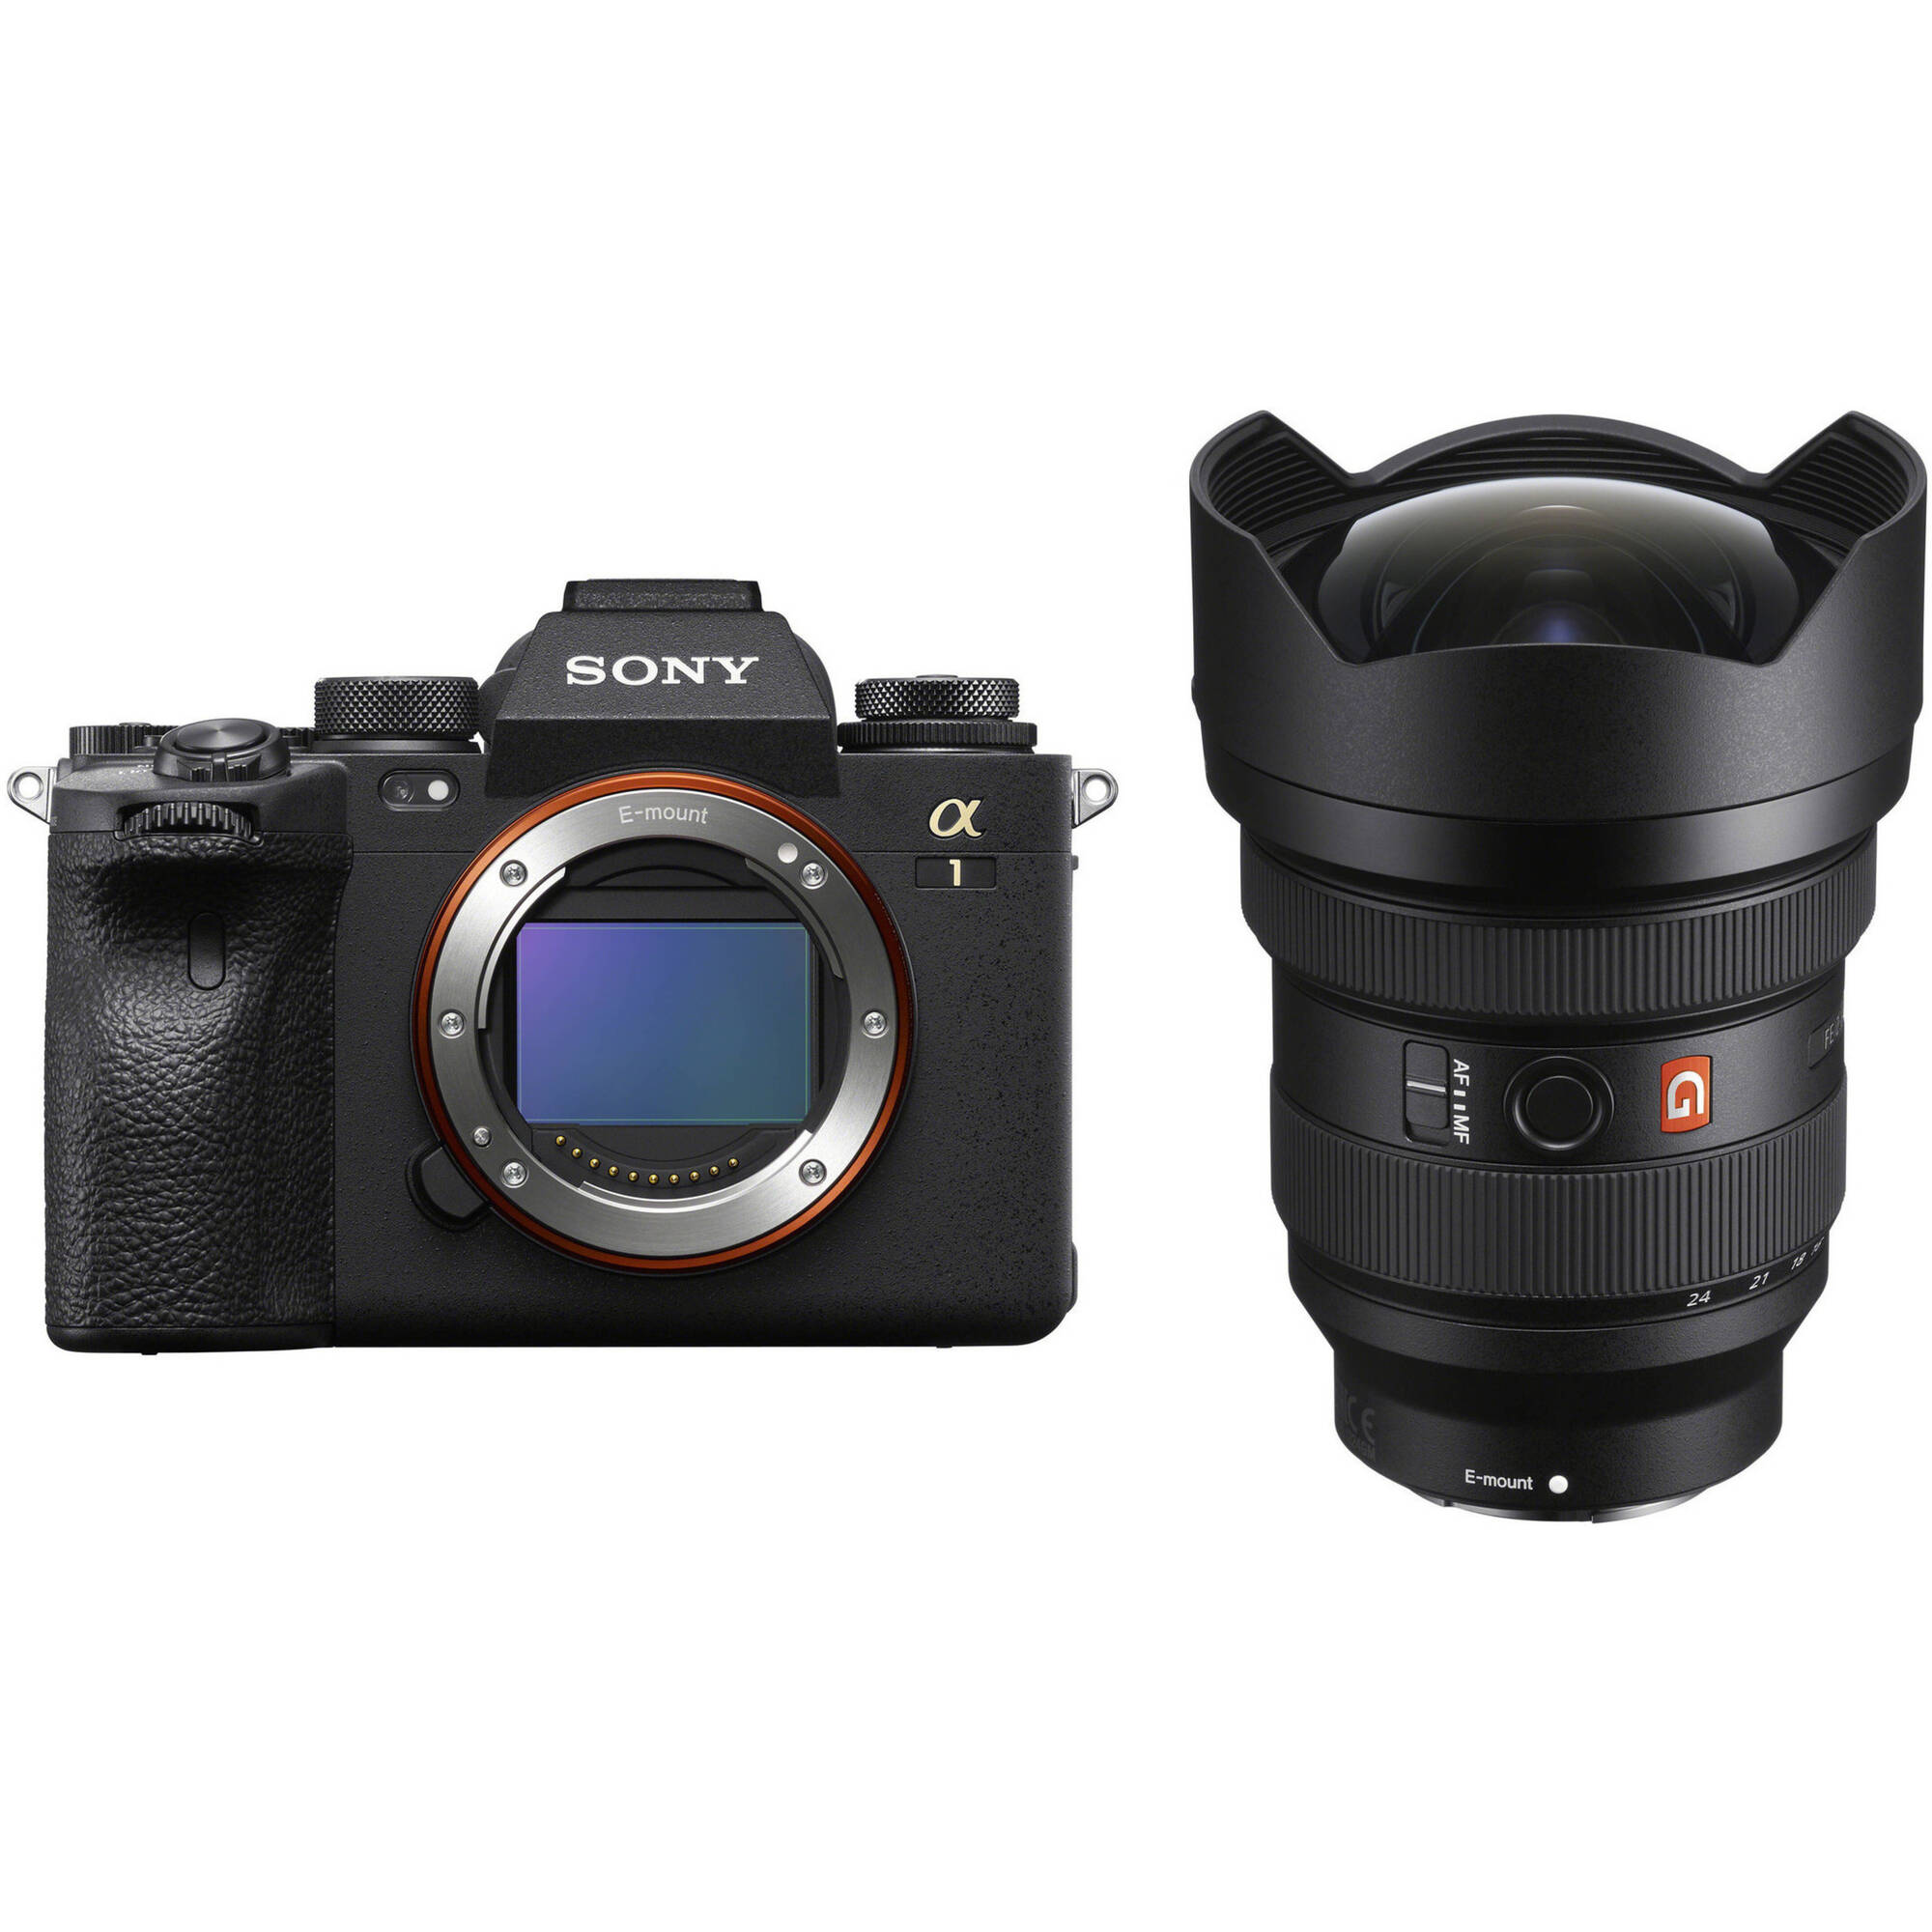 Cámara sin espejo Sony a1 con kit de lentes de 12-24 mm